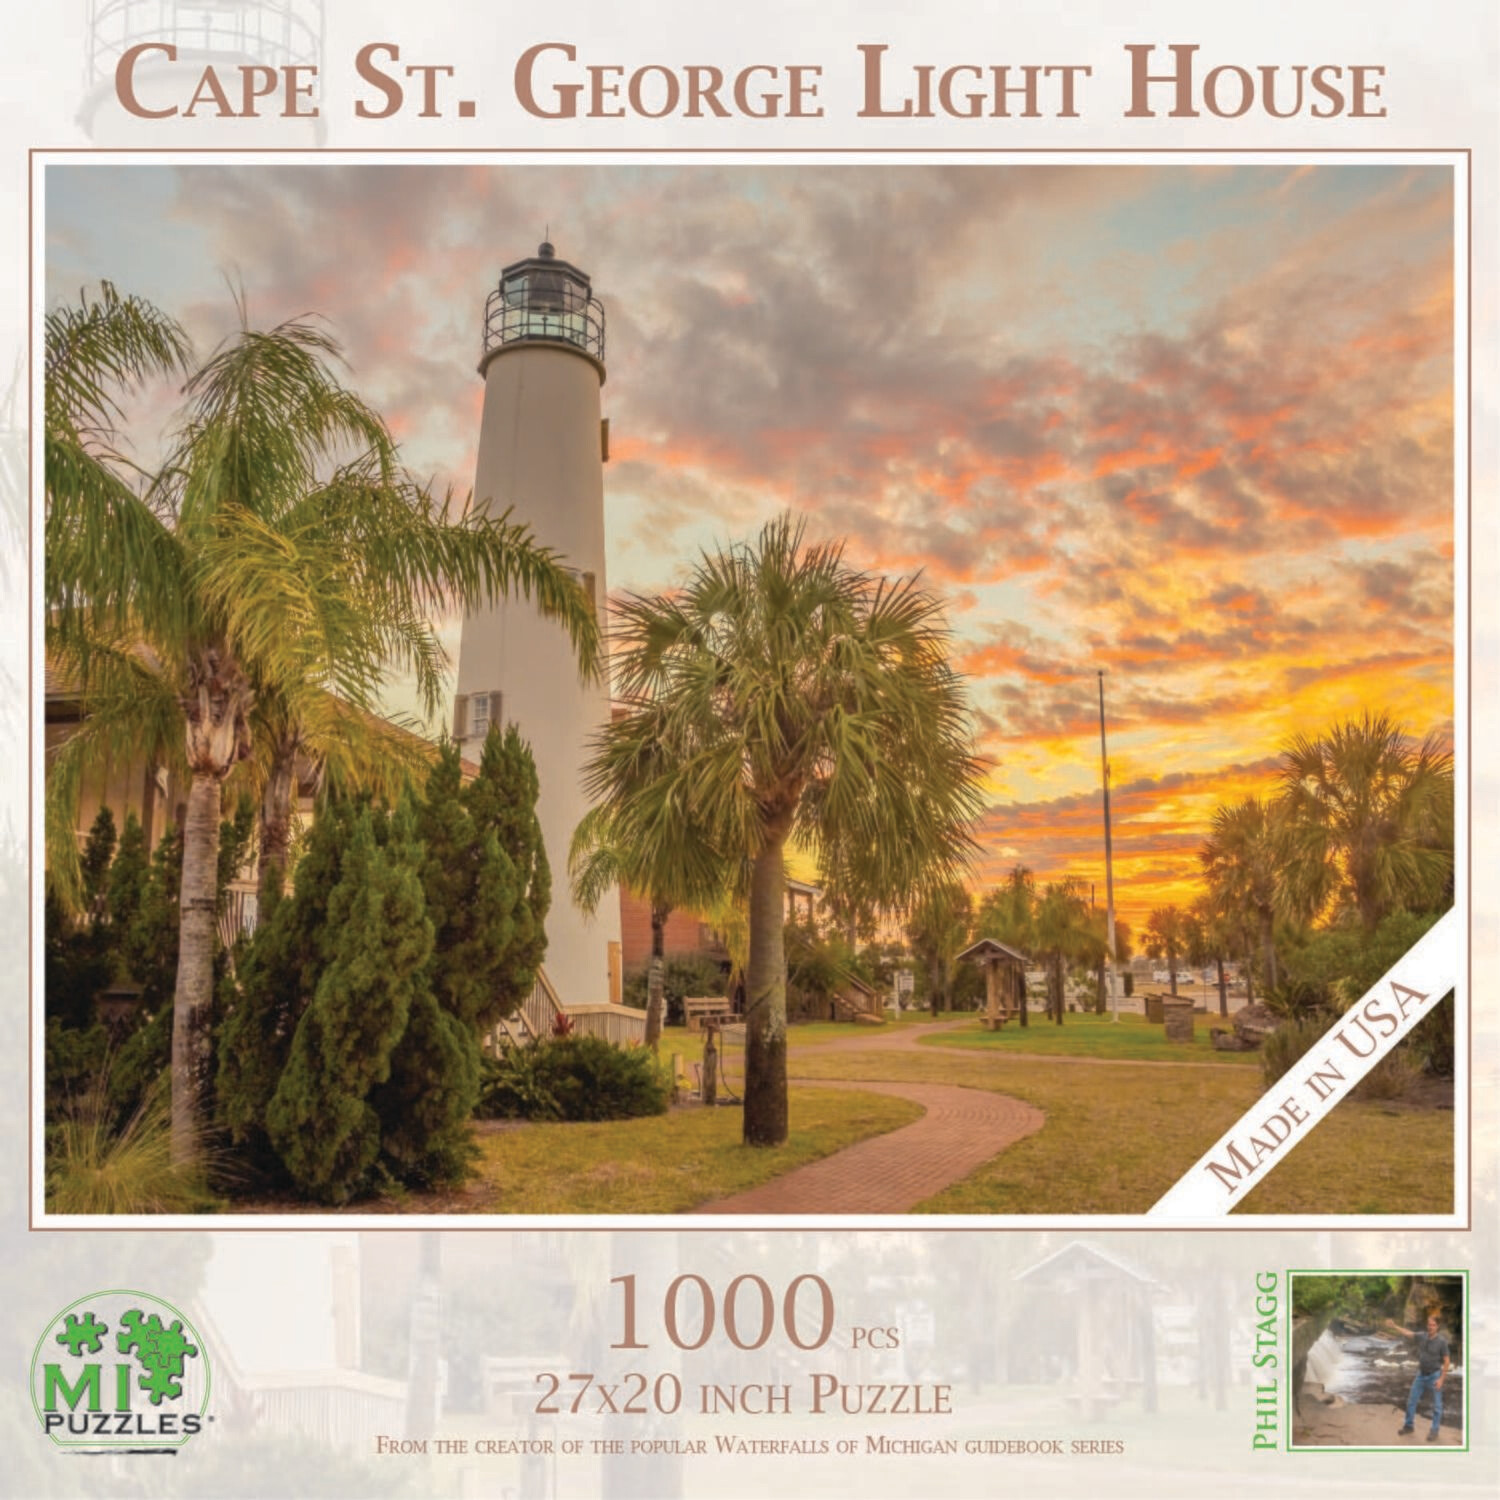 CAPE ST. GEORGE LIGHT HOUSE